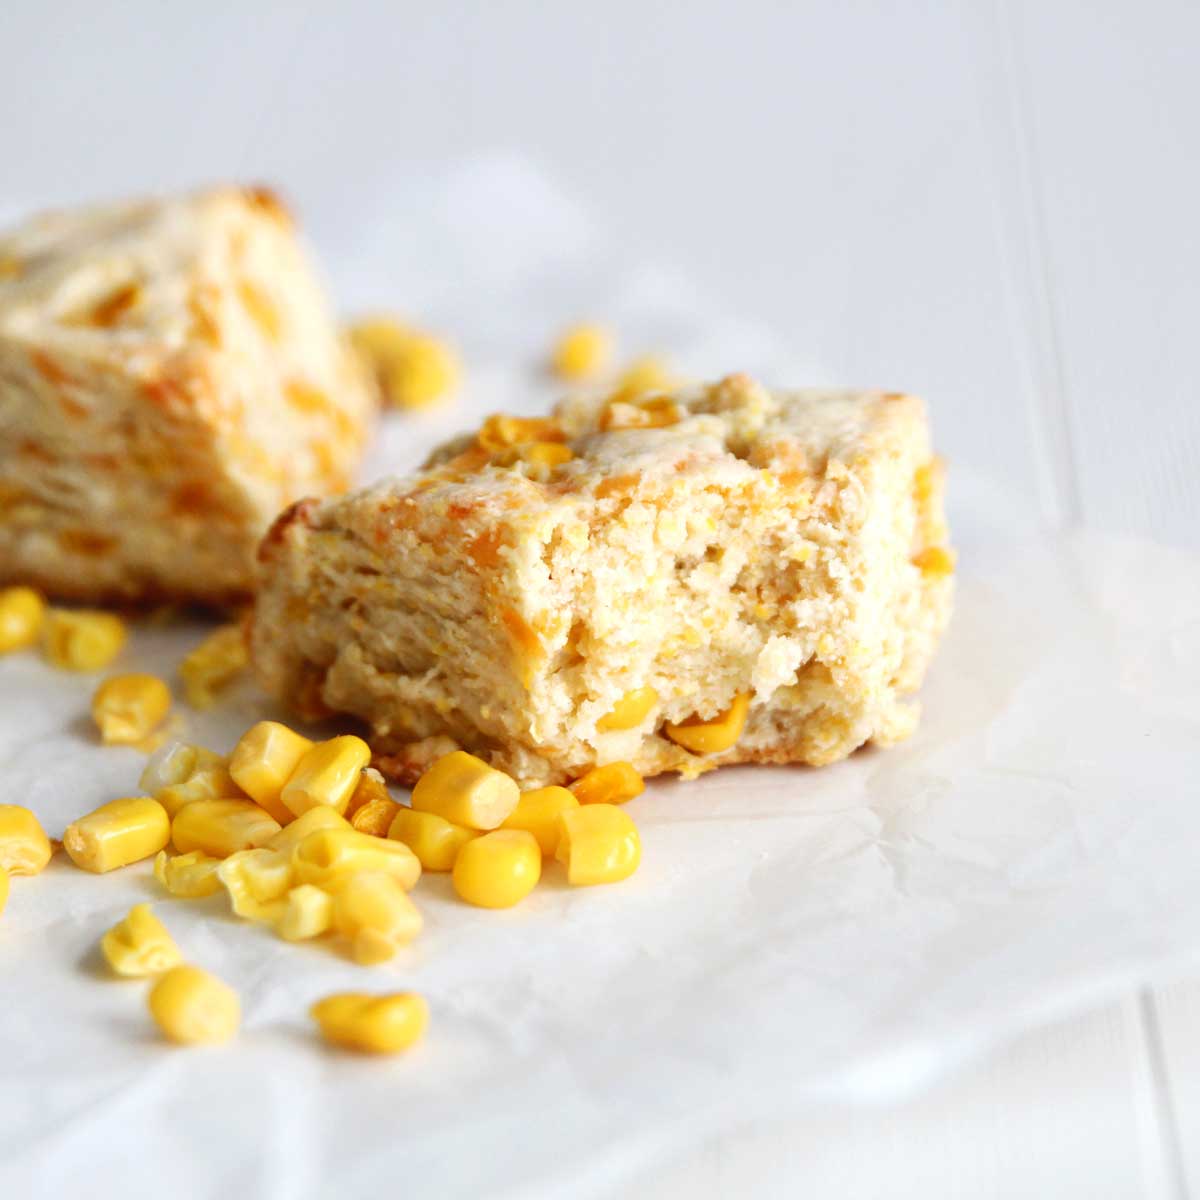 Homemade Savory Corn Scones with Cheddar & Sour Cream - Vegan Scones with Cornstarch